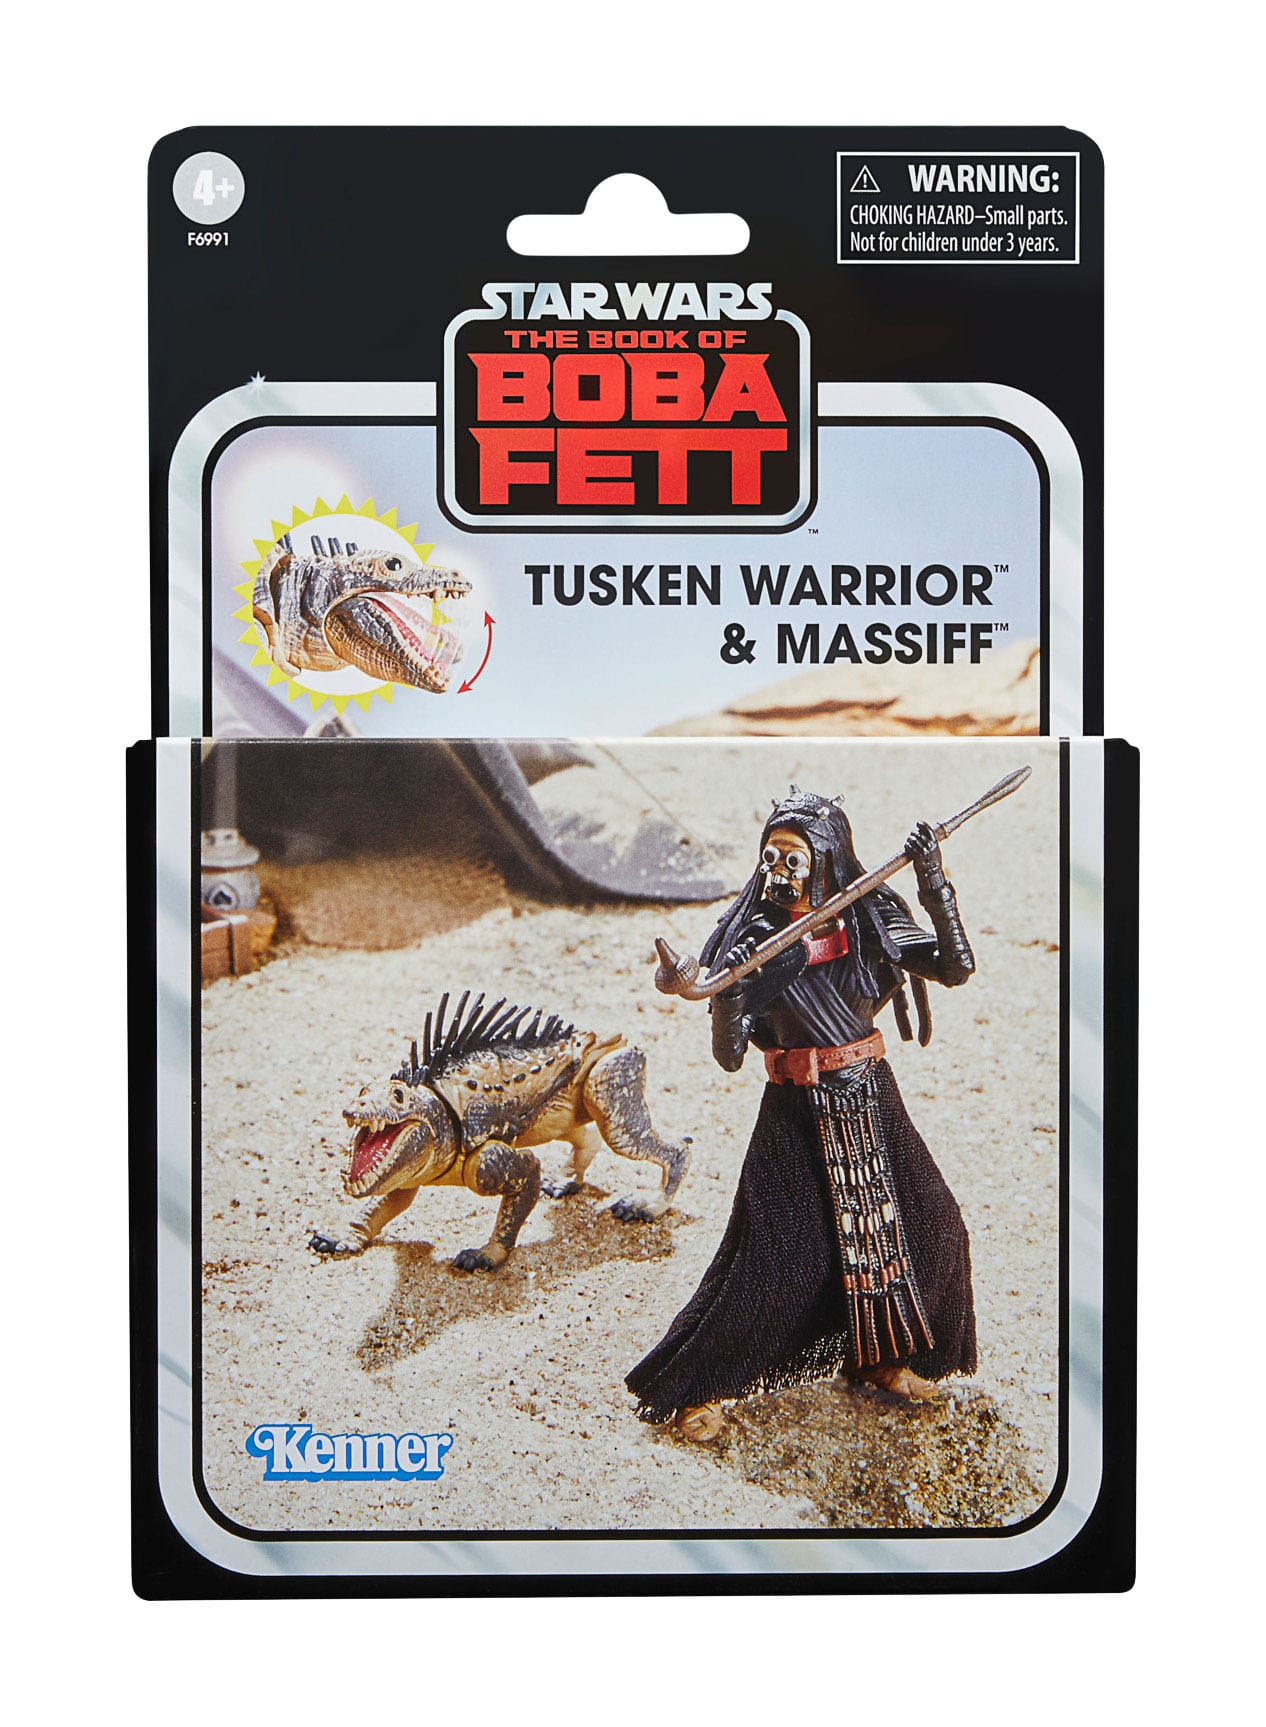 Star Wars: The Book of Boba Fett Vintage Collection Actionfiguren Tusken Warrior & Massiff 10 cm HASF6991 5010996105066